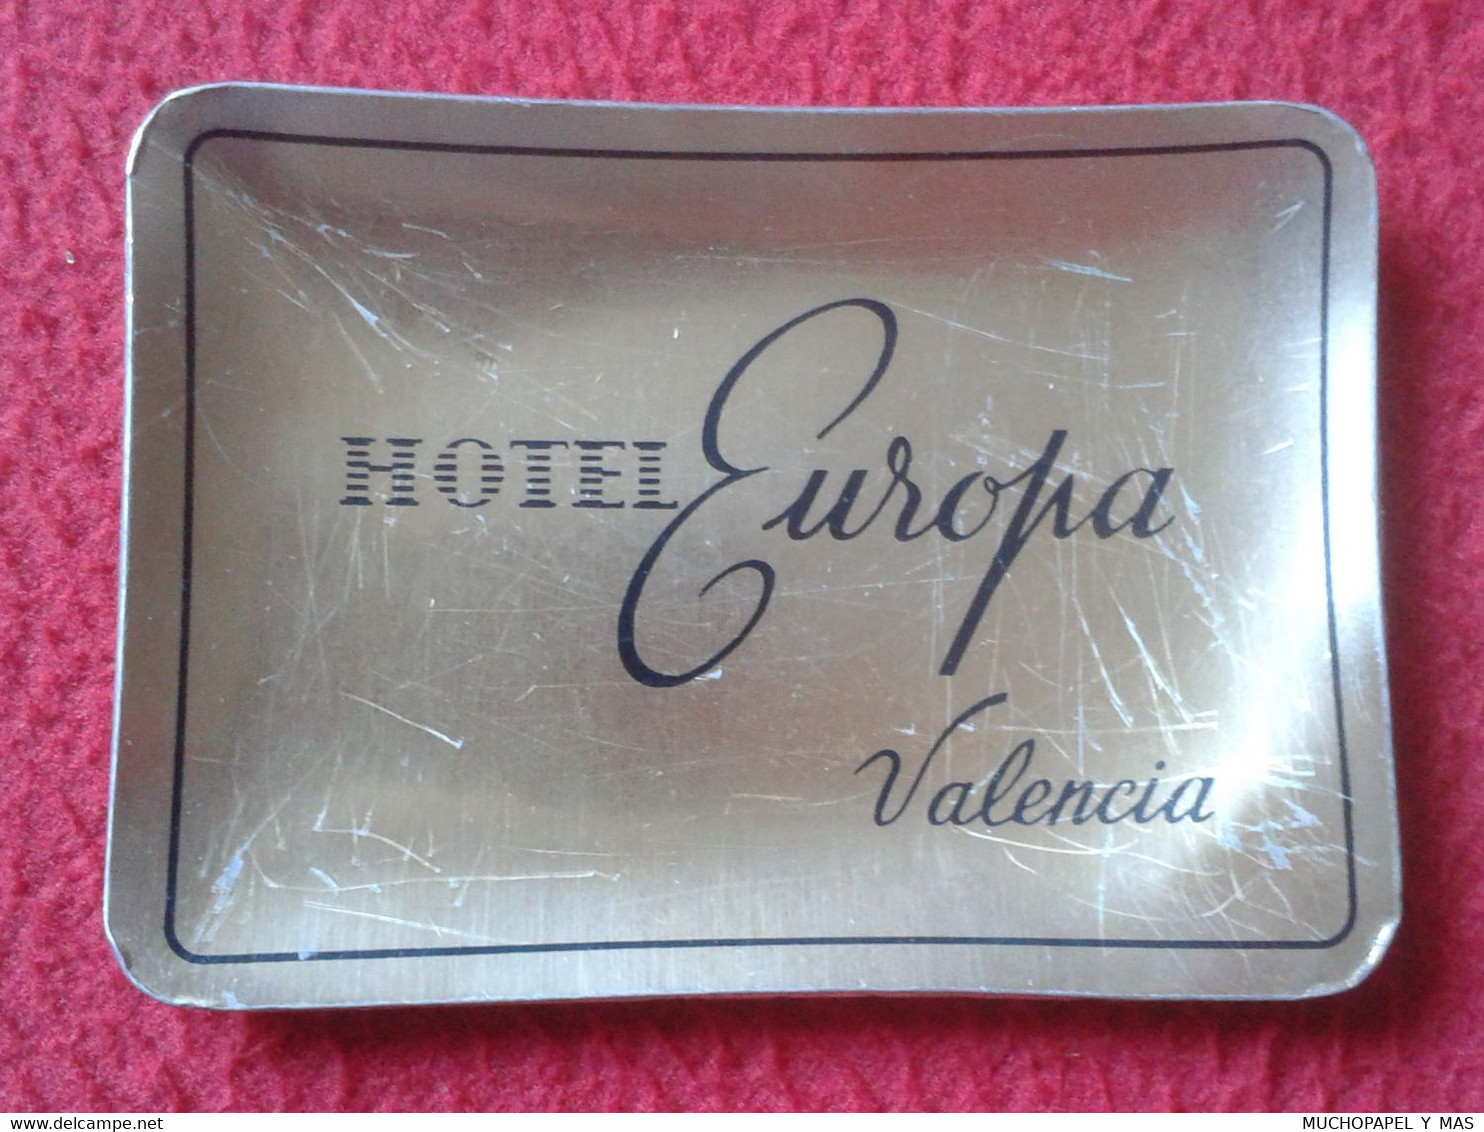 ANTIGUO CENICERO ASHTRAY CENDRIER HOTEL EUROPA VALENCIA ESPAÑA SPAIN MATERIAL TIPO ALUMINIO O SIMIL ASCHENBECHER ESPAGNE - Metal